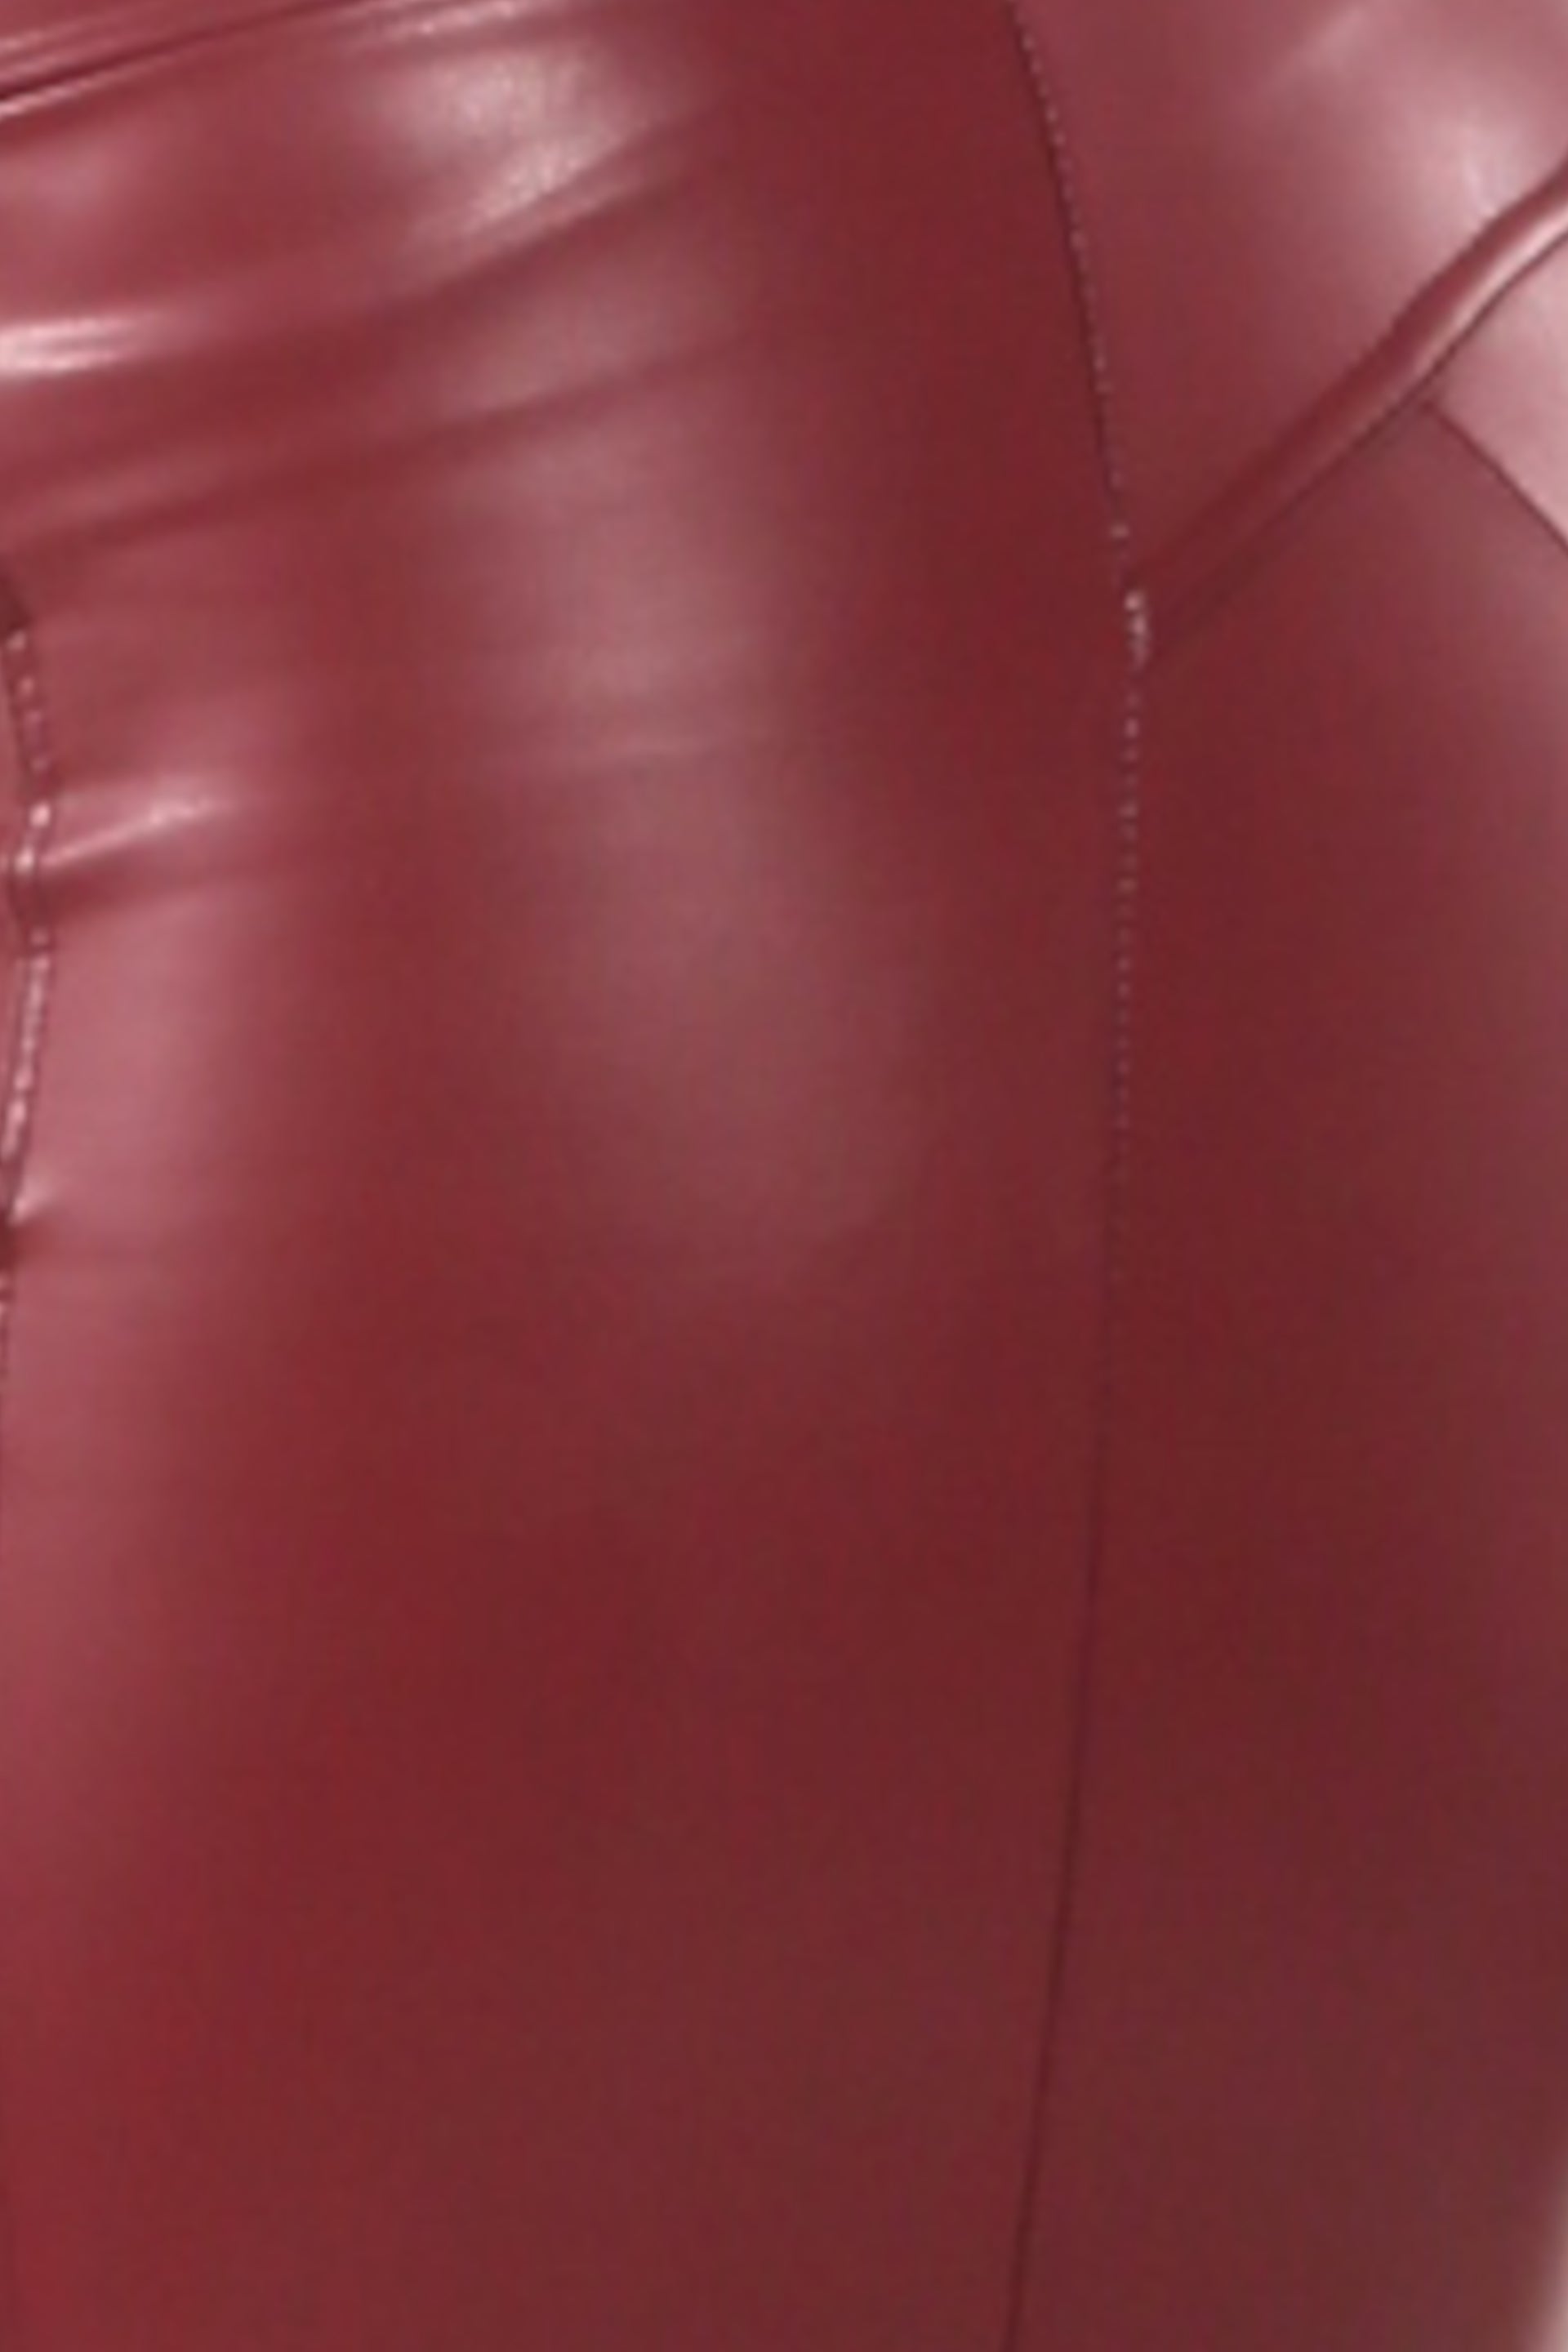 Wholesale Womens High Waist Sculpting PU Faux Leather Skinny Pants - Burgundy - S&G Apparel